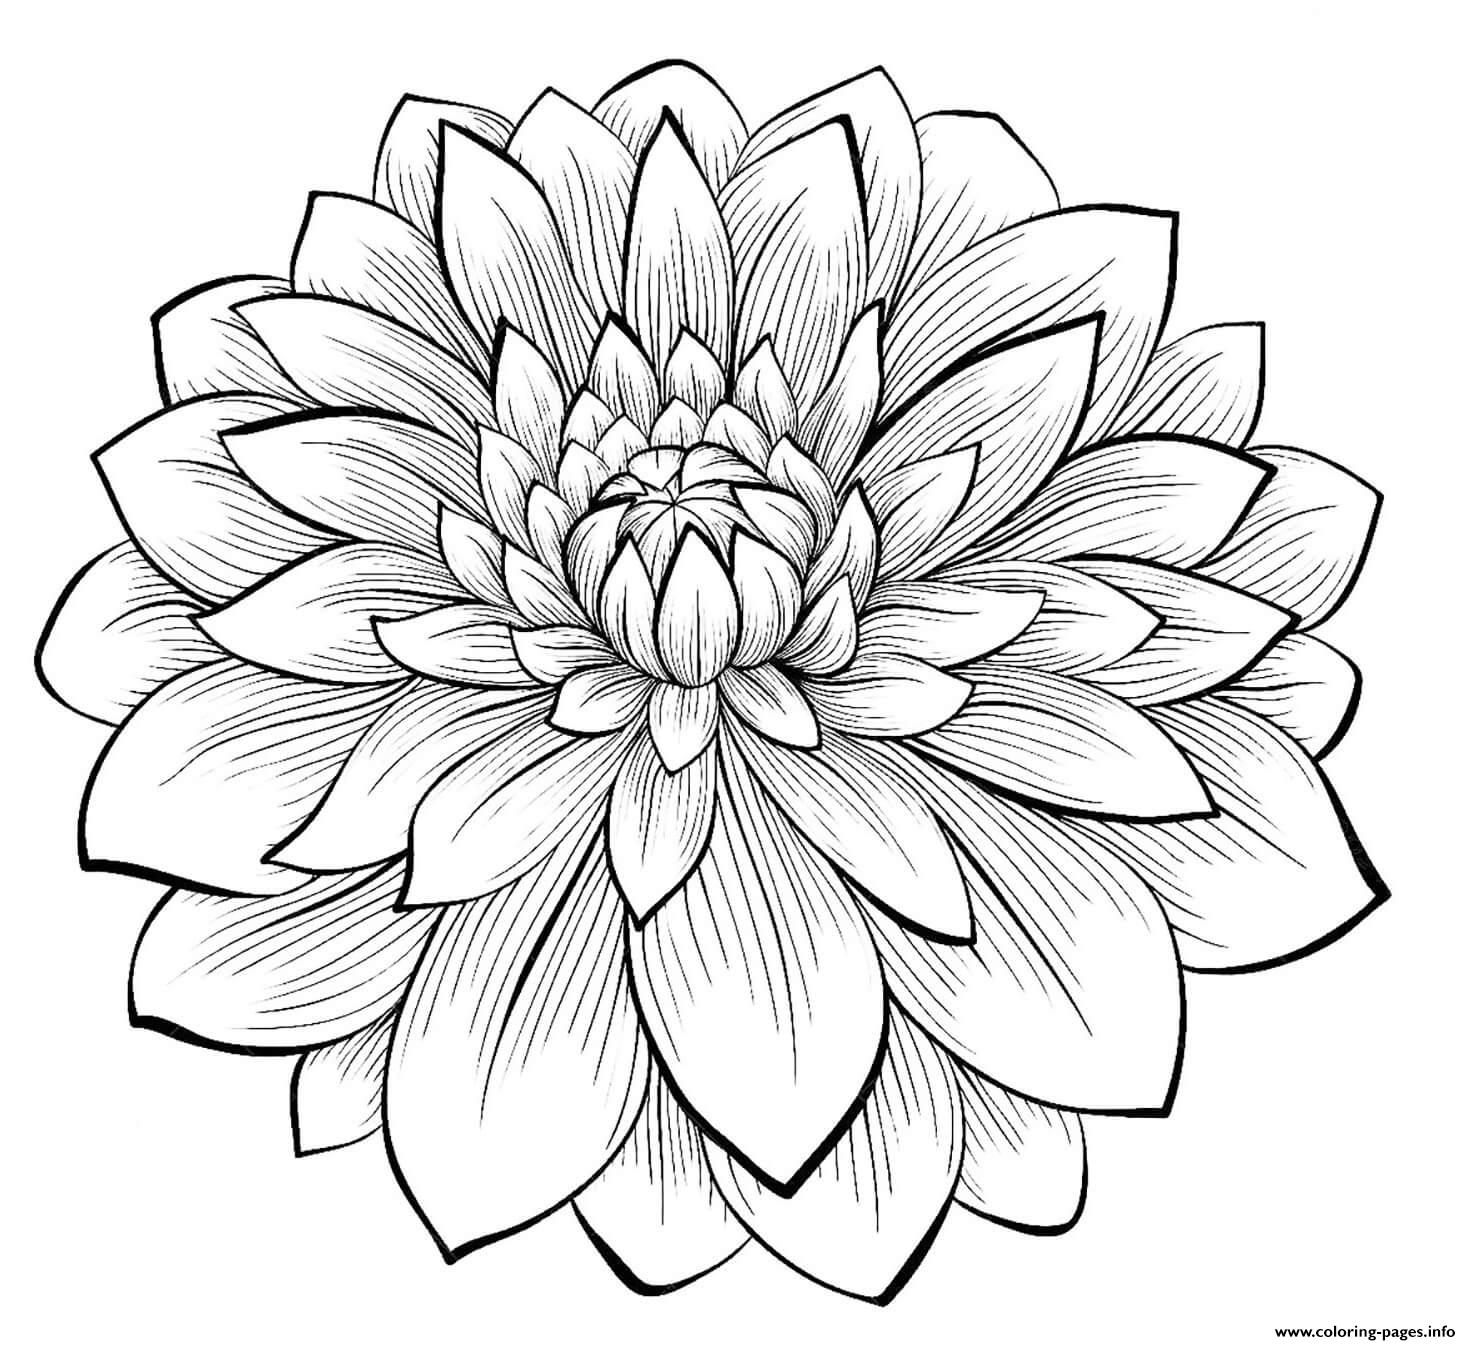 gambar sketsa bunga indah